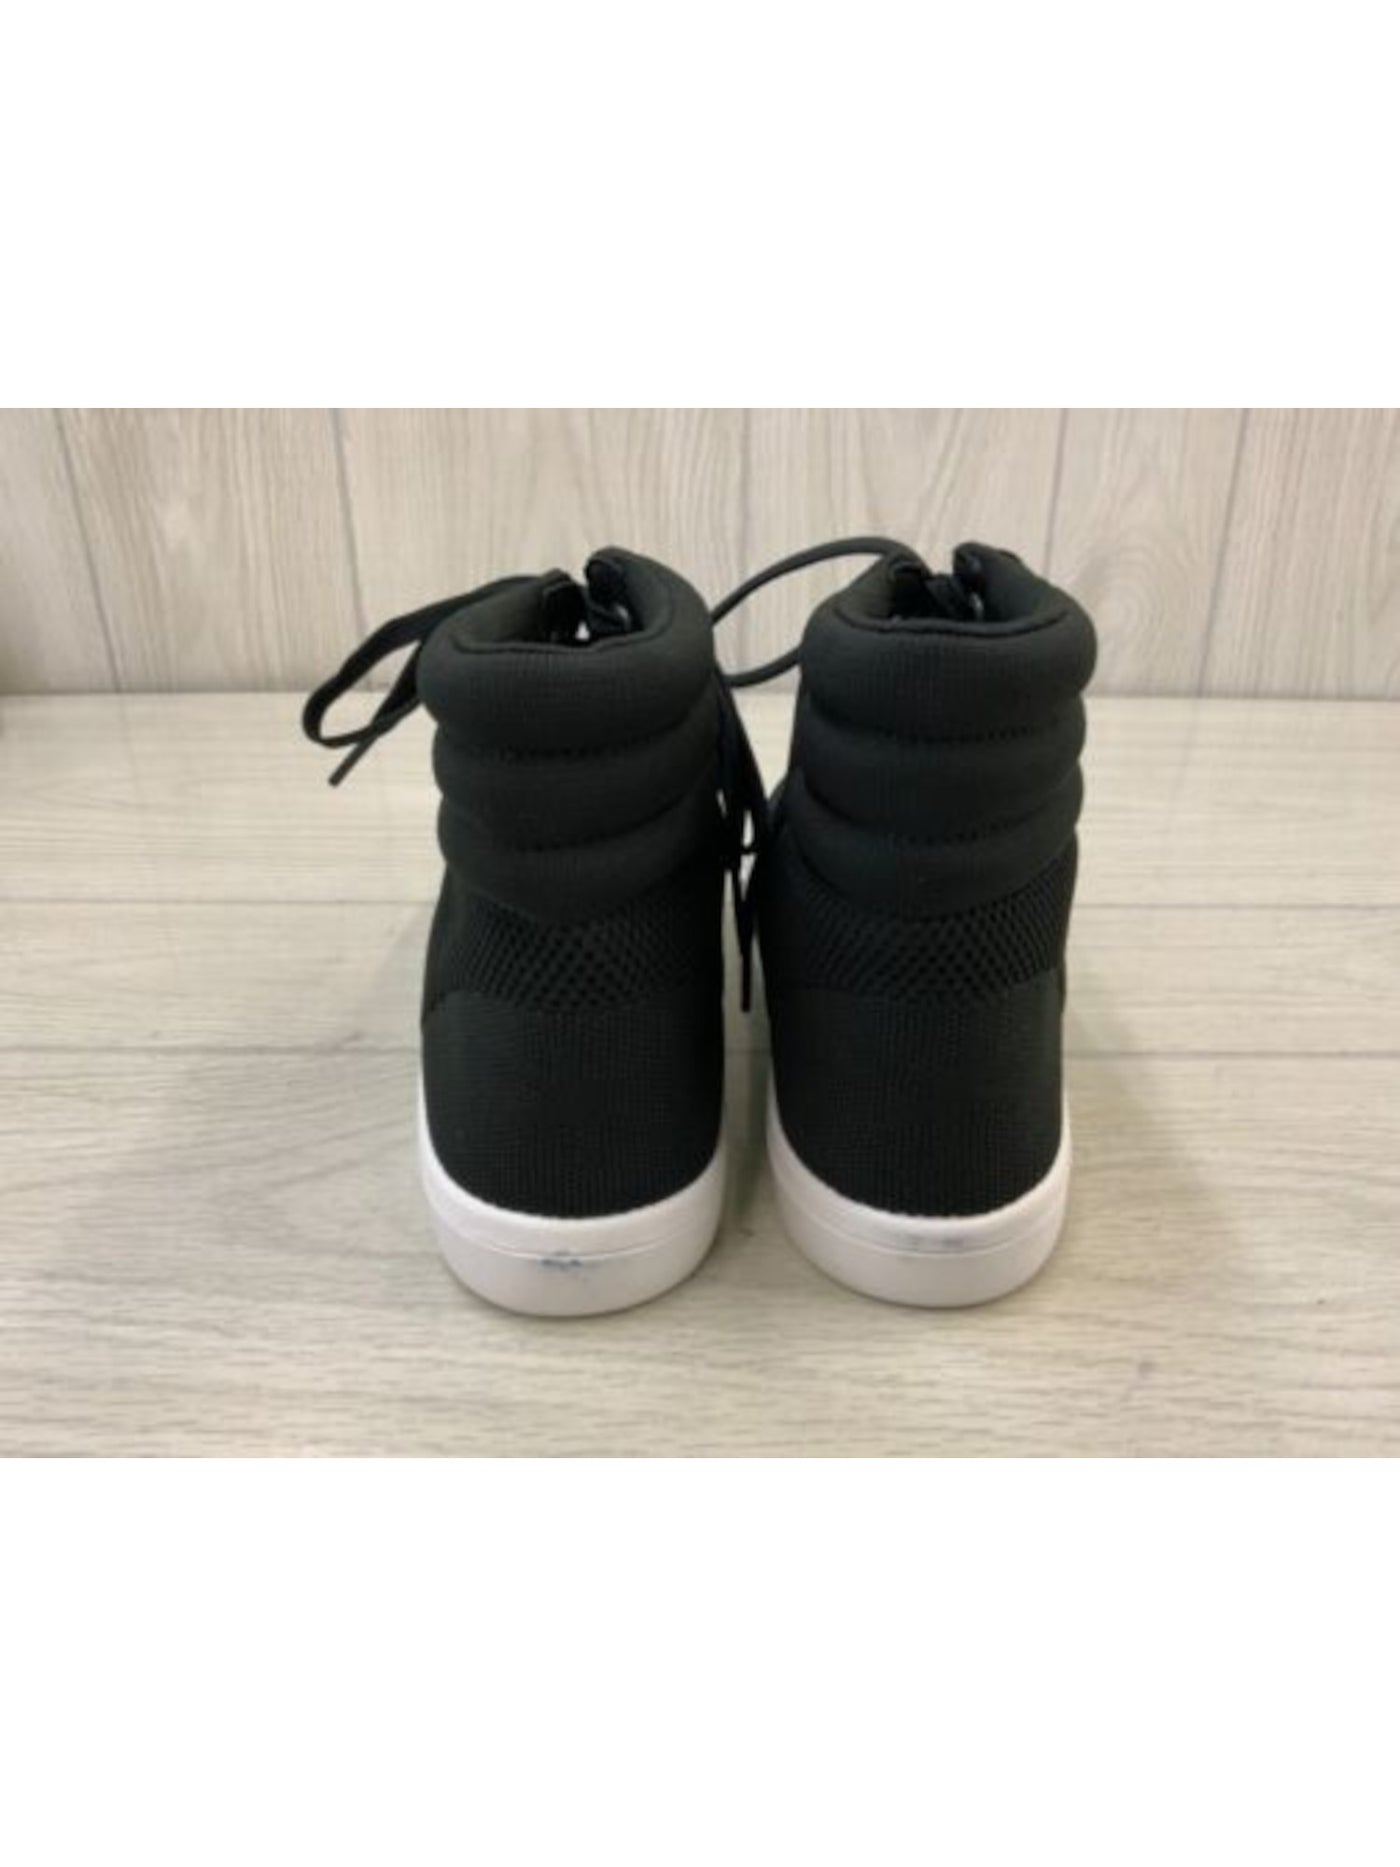 SPLENDID Womens Black Knit Comfort Leona Round Toe Platform Lace-Up Athletic Sneakers Shoes 8 M